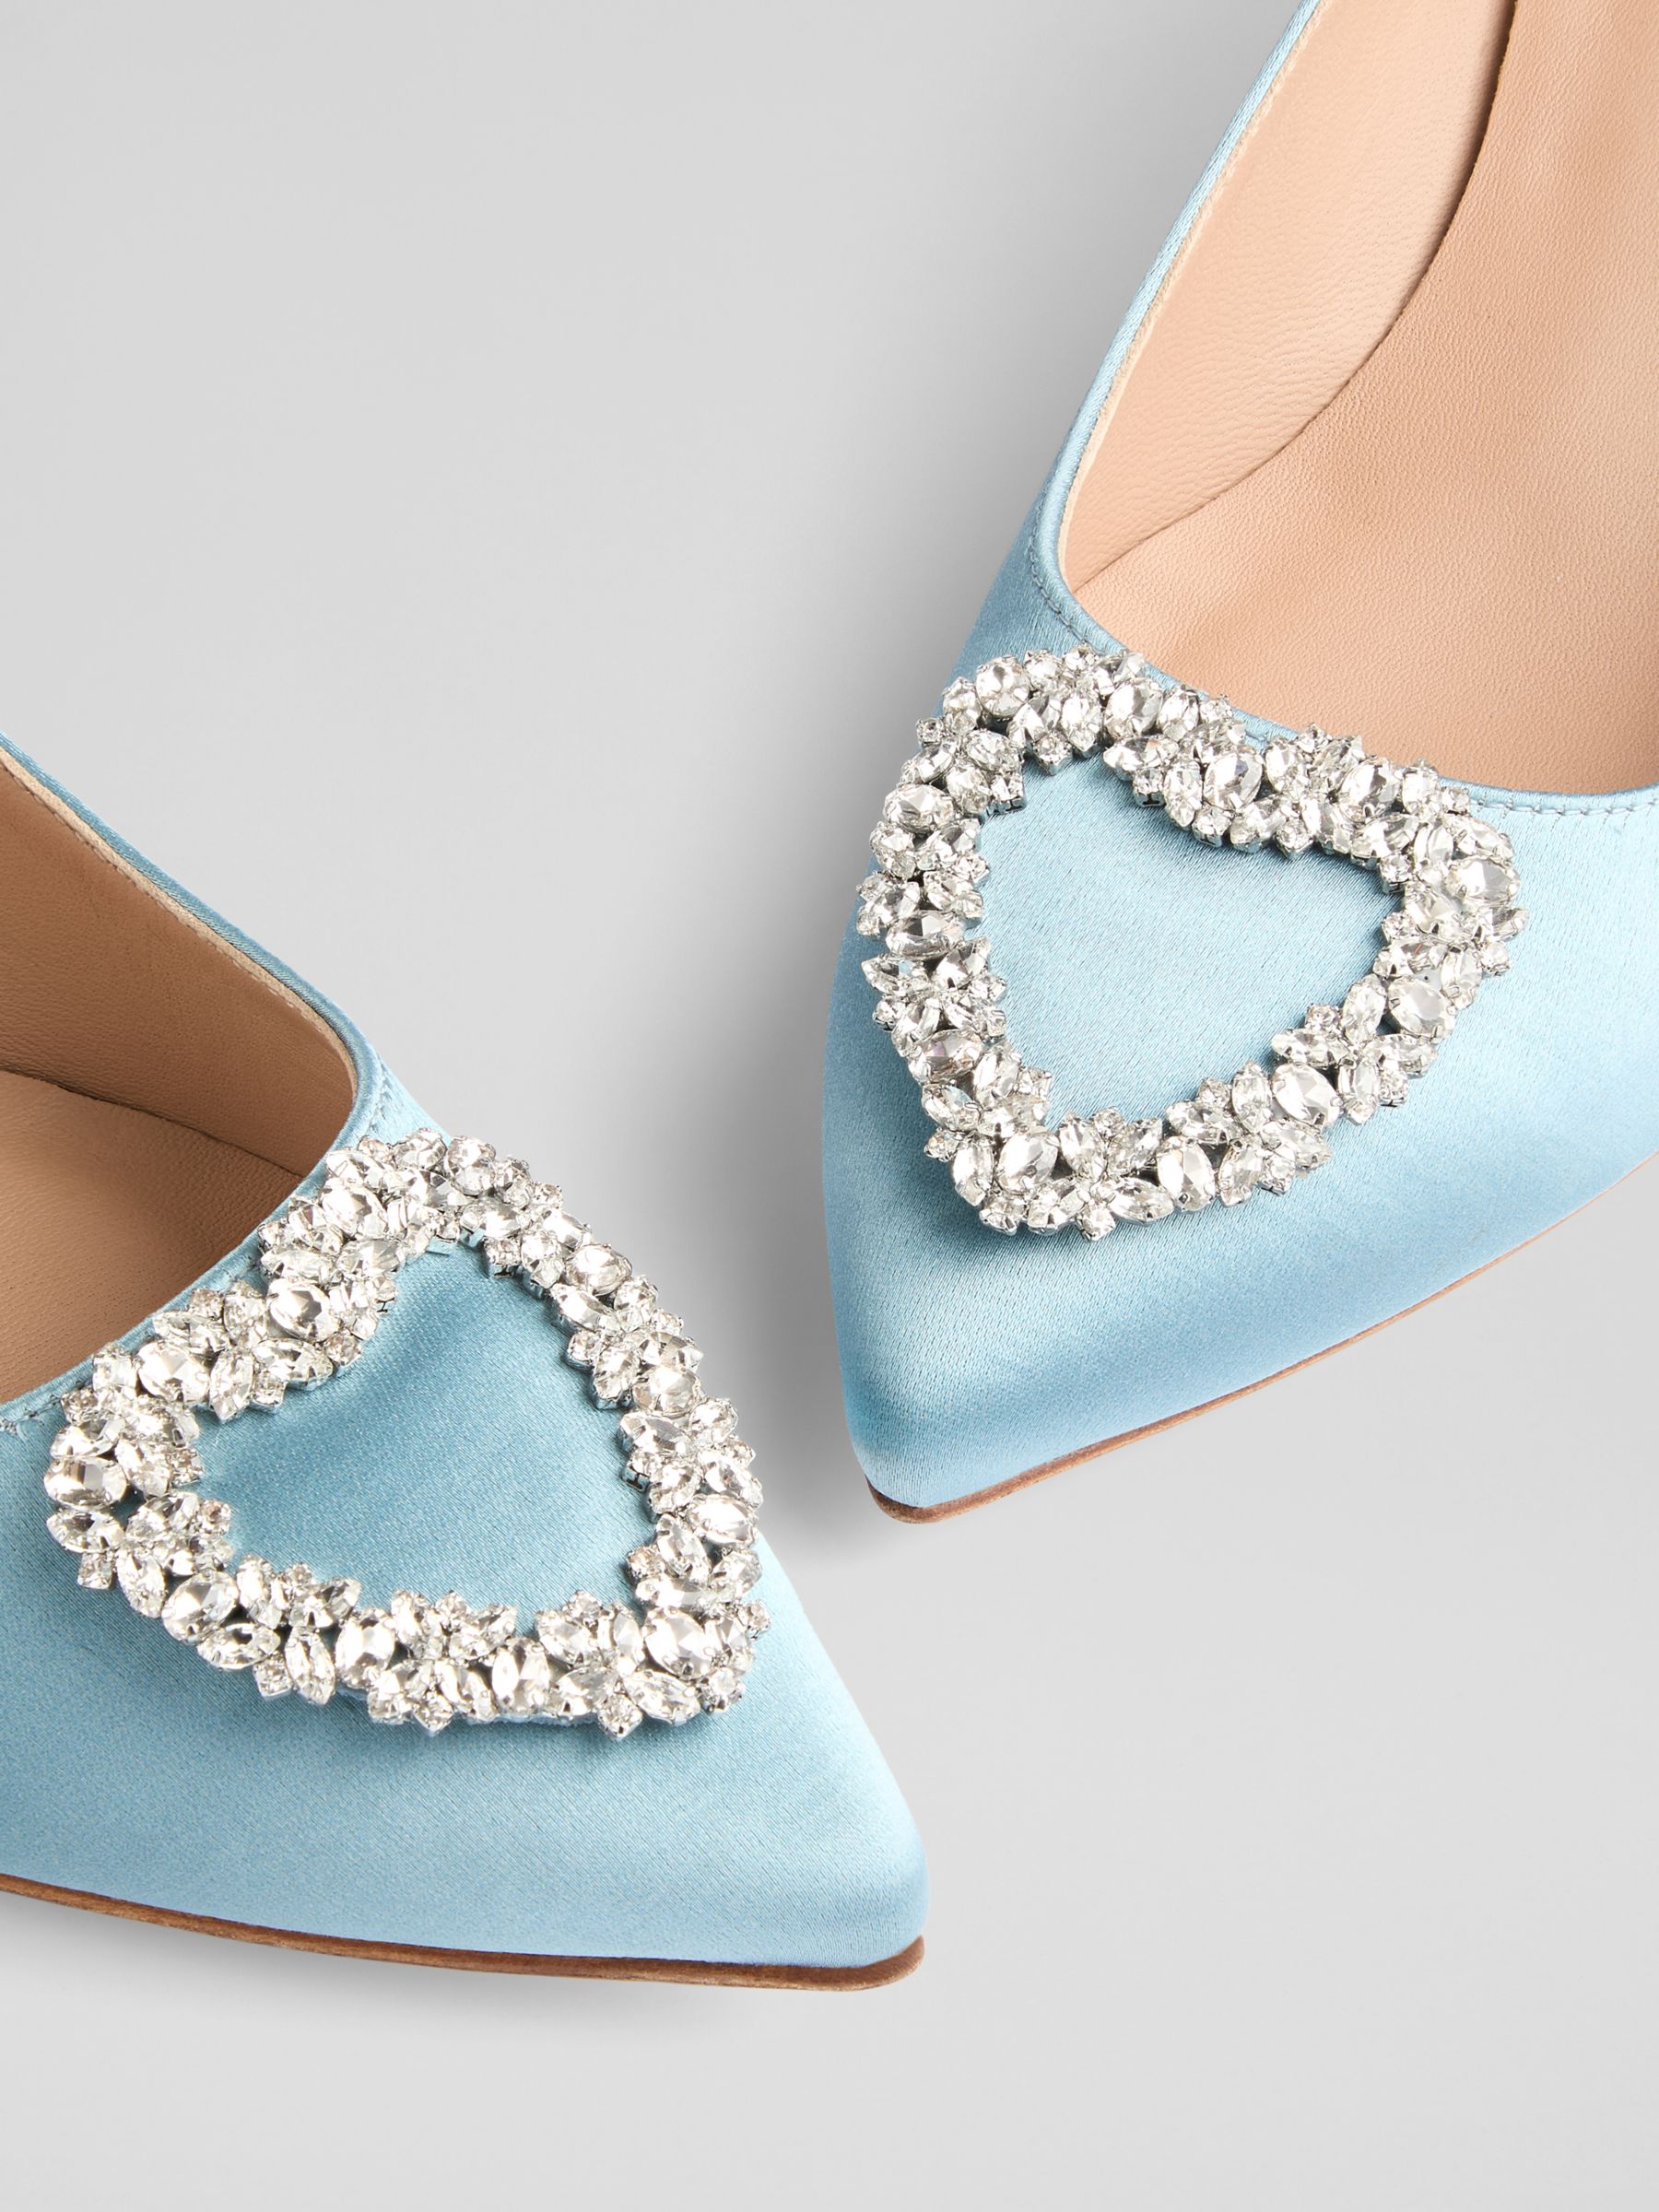 Buy L.K.Bennett Ella Satin Kitten Heel Shoes, Light Blue Online at johnlewis.com